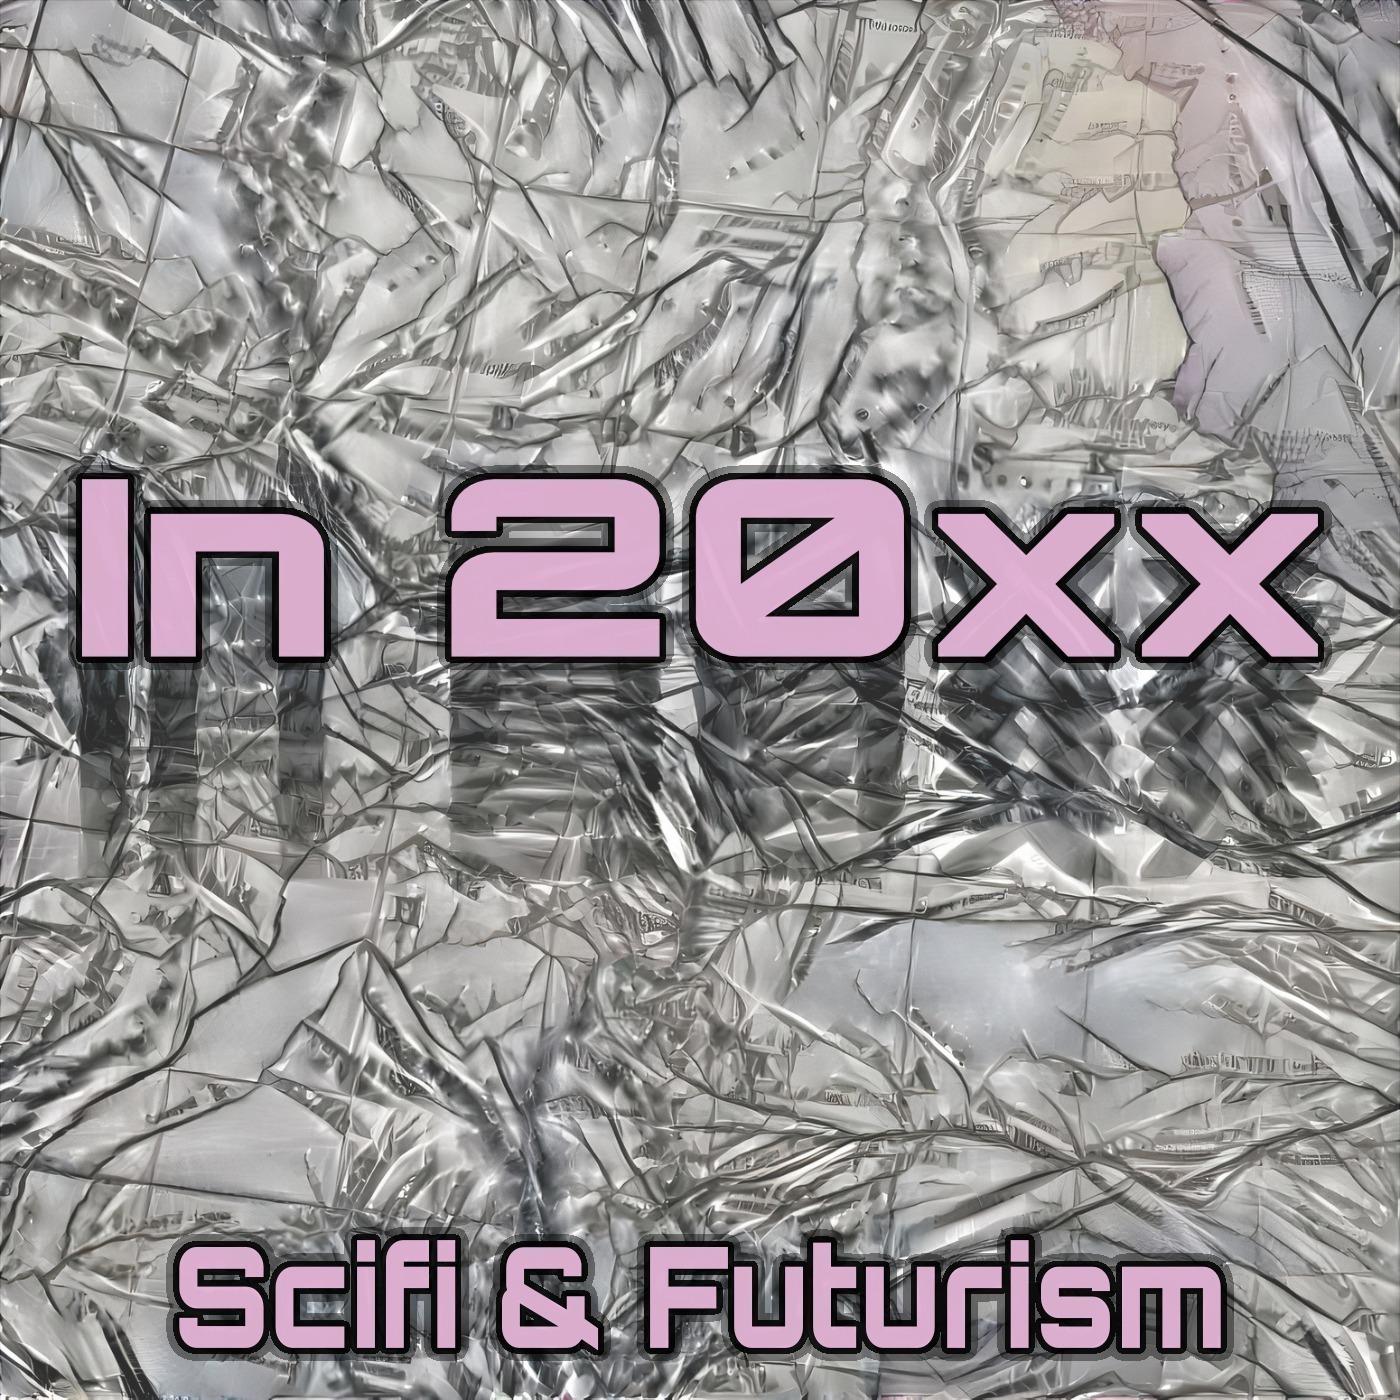 In 20xx Scifi and Futurism